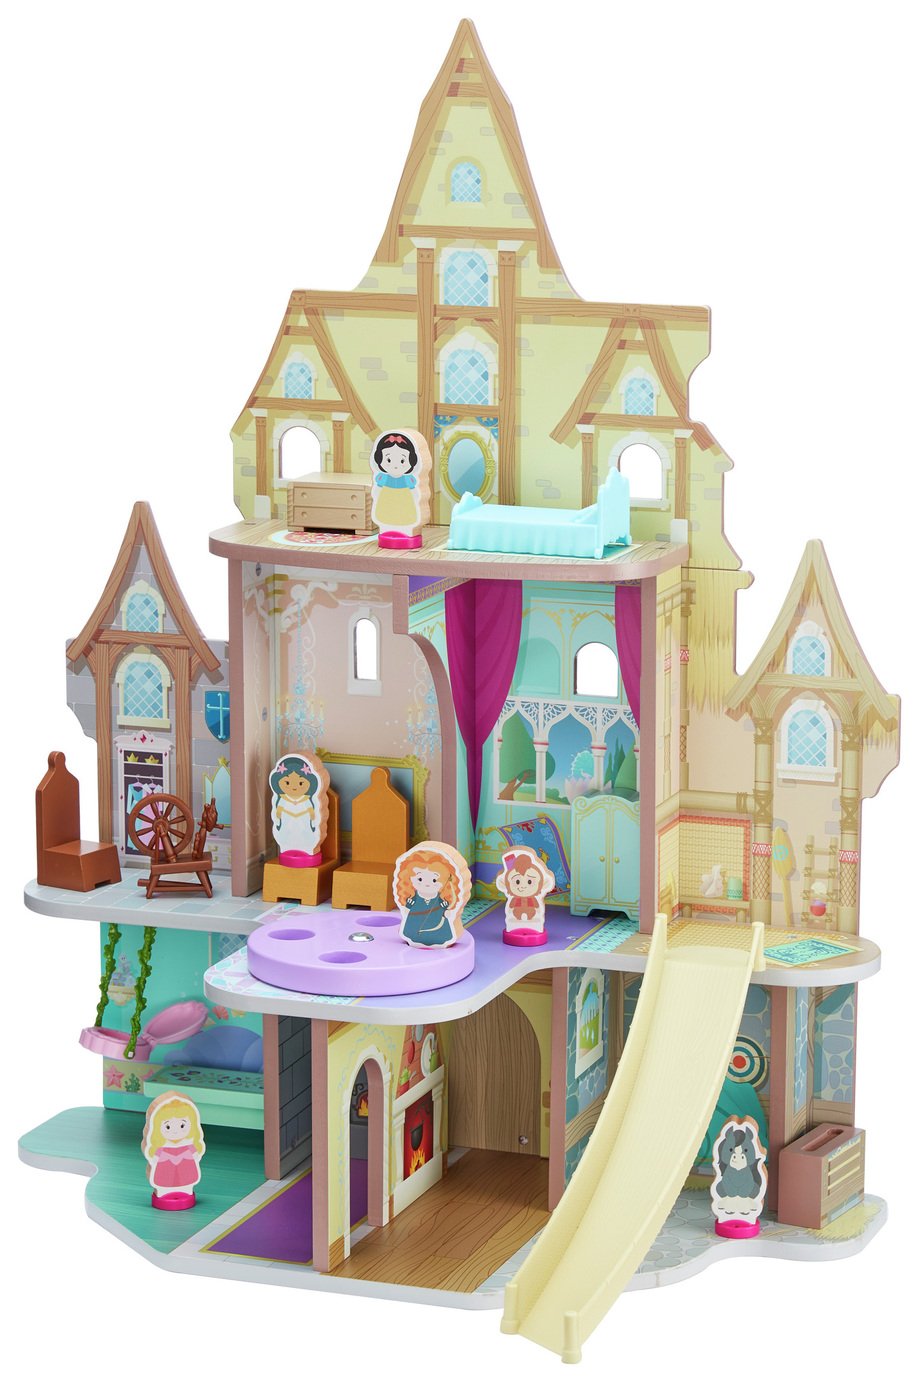 Disney Princess Enchanted Princess Castle Wooden Playset review